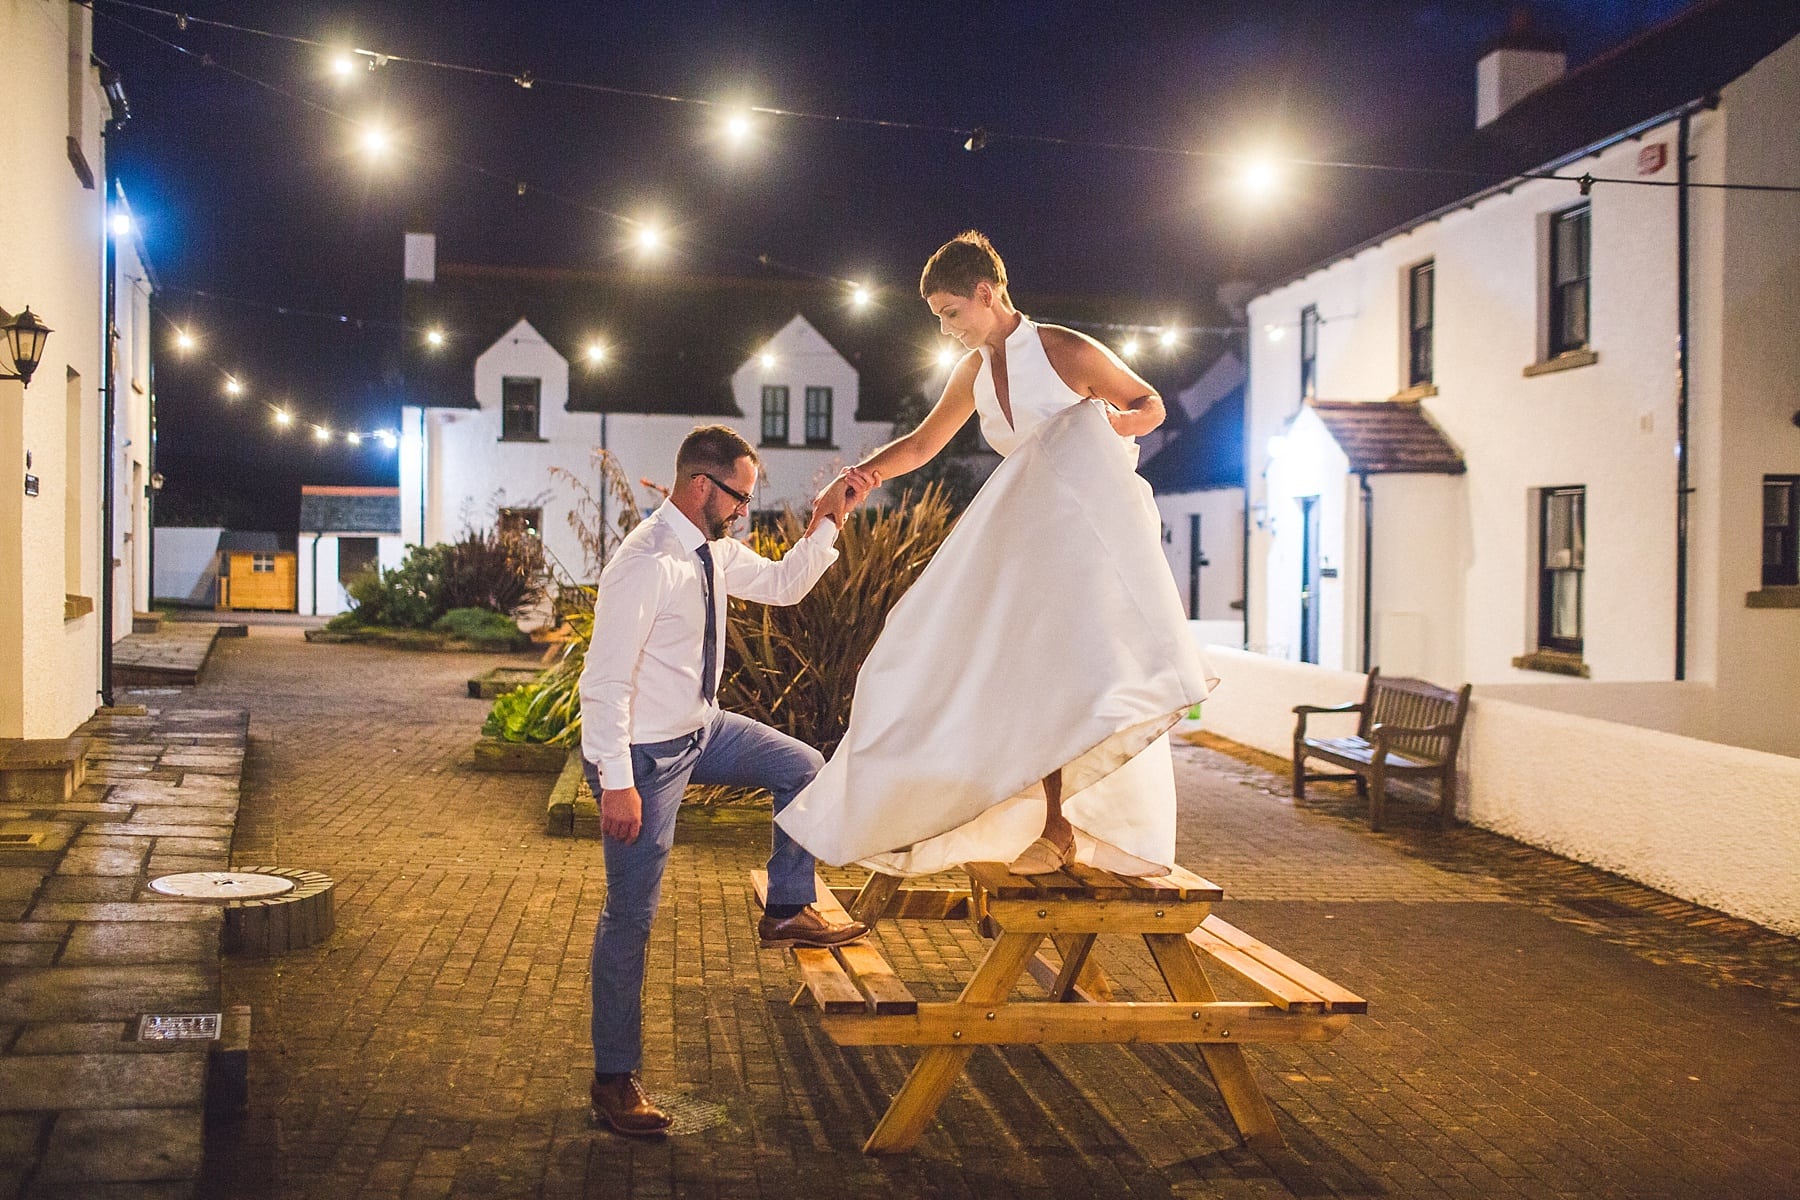 Irish wedding photographer,fun,dancing,marquee inspiration,laughter,bride and groom,